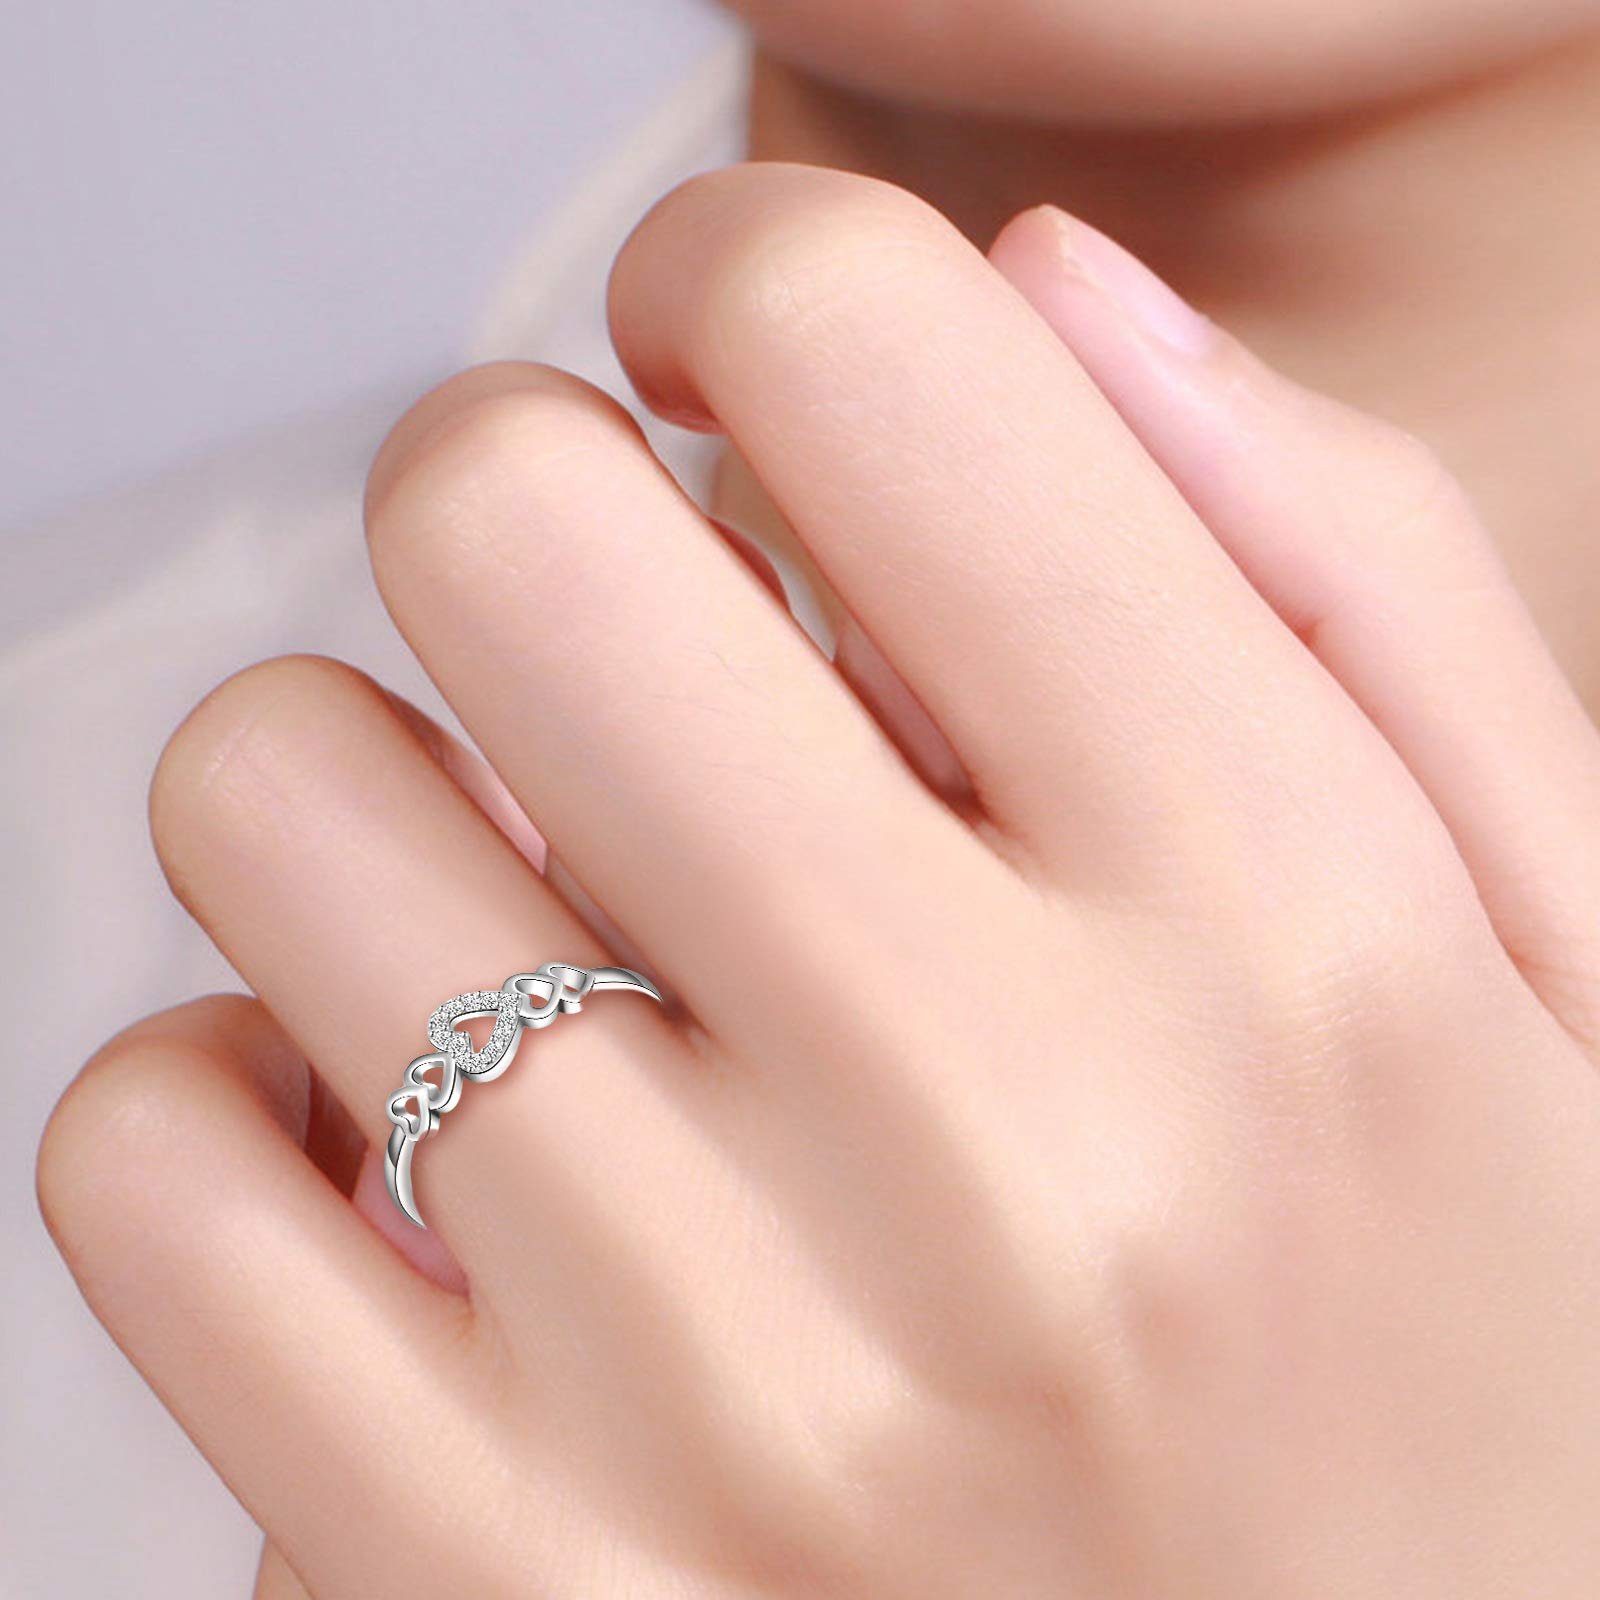 POCHUMIDUU Fingerring Frauen Silber Ring, S925 Trend aus Sterling Silberschmuck Damen für Sterlingsilber Herzform 925er Mode